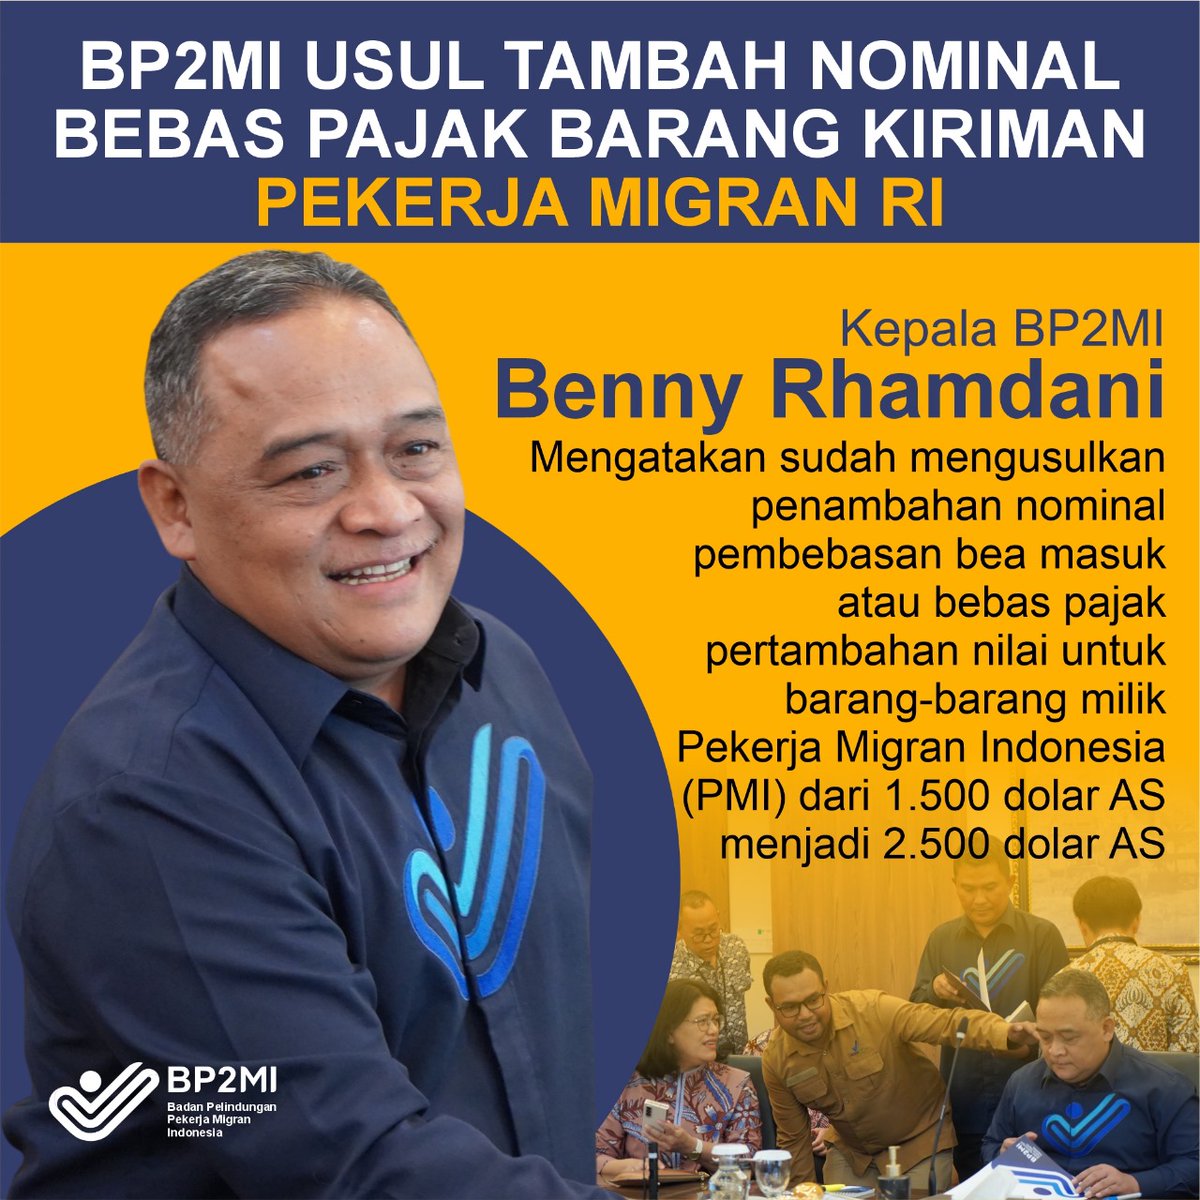 Kepala (BP2MI) Benny Rhamdani mengatakan terbitnya Permendag Nomor 36 Tahun 2023 tentang tentang Kebijakan dan Pengaturan Impor mengakibatkan penumpukan barang Pekerja Migran Indonesia (PMI) pada Desember 2023. @Kepala_BP2MI #PerjuanganBP2MIUntukPMI #BP2MI #SikatSindikat